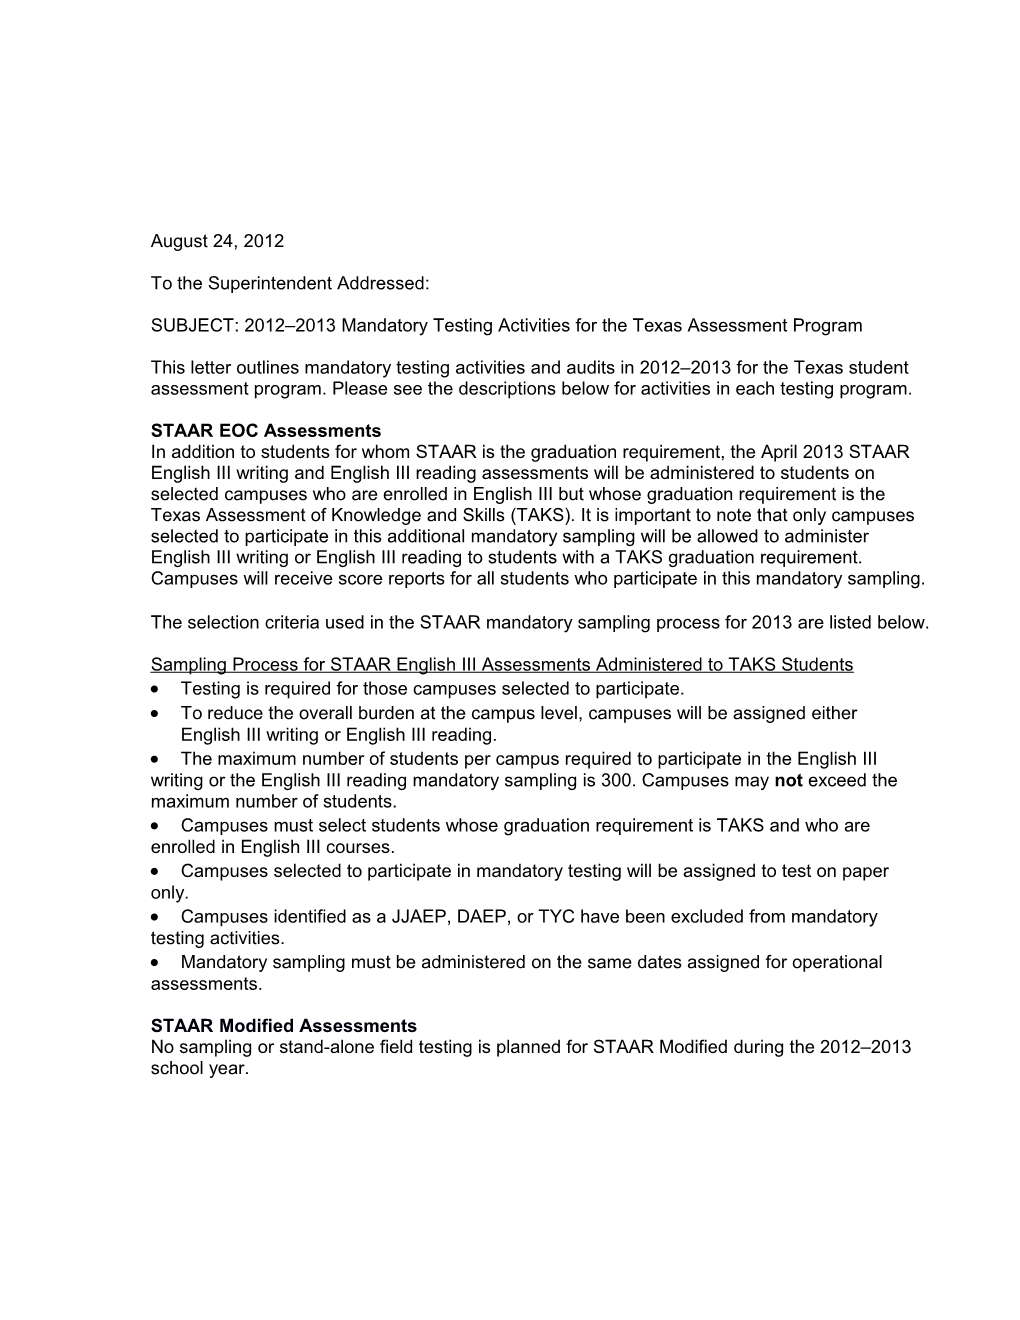 2012 2013 Mandatory Testing Activities for the Texas Assessment Program